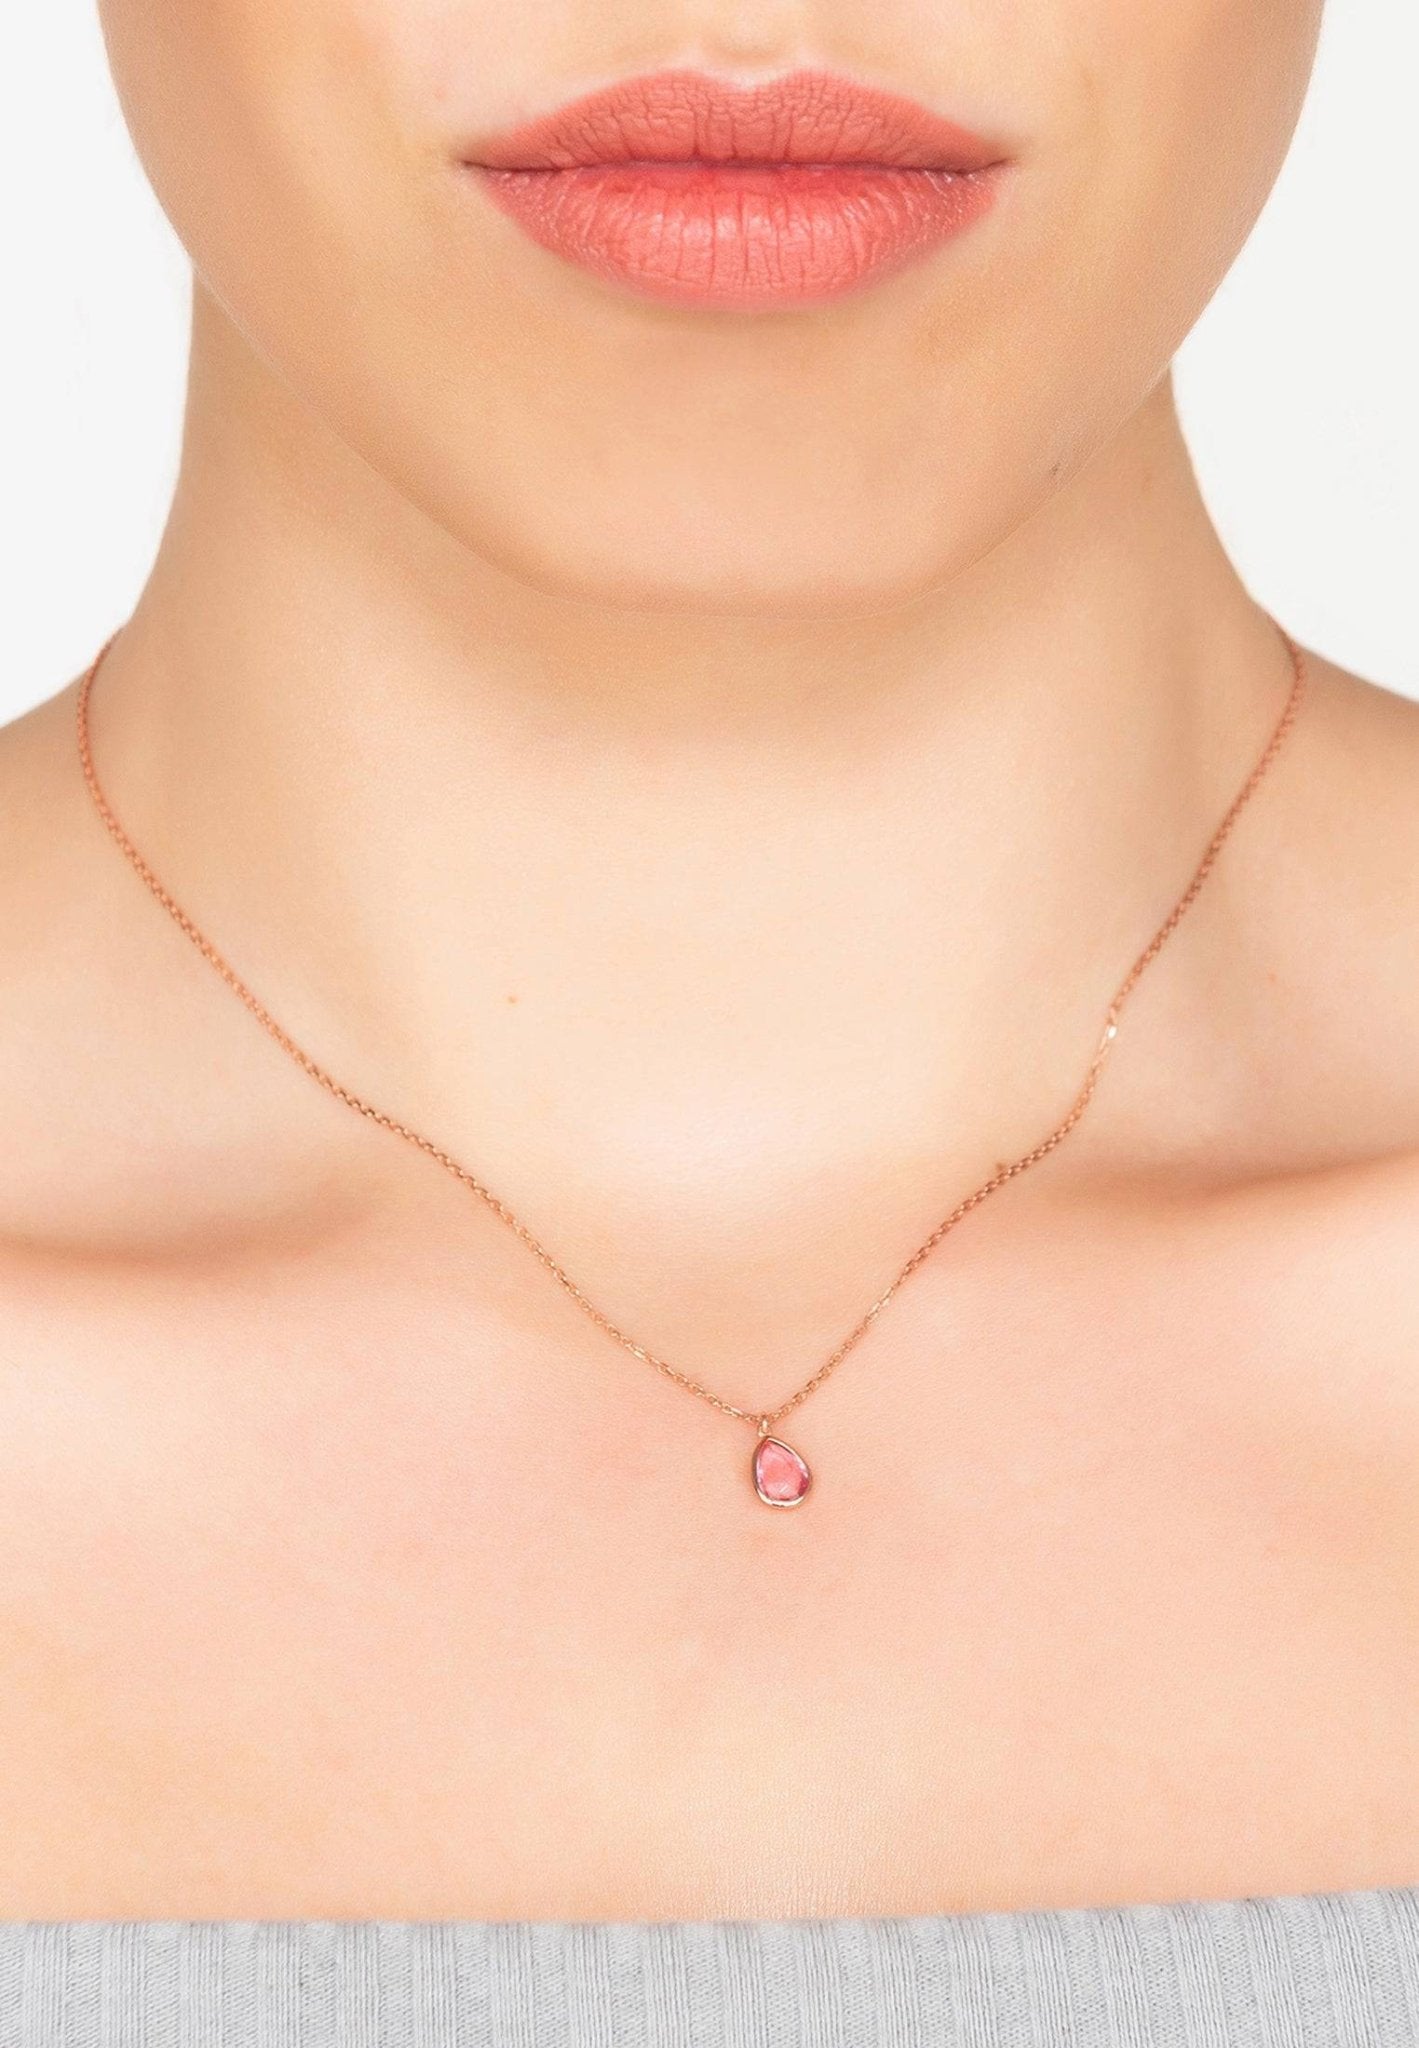 Pisa Mini Teardrop Necklace Rosegold Pink Tourmaline - LATELITA Necklaces